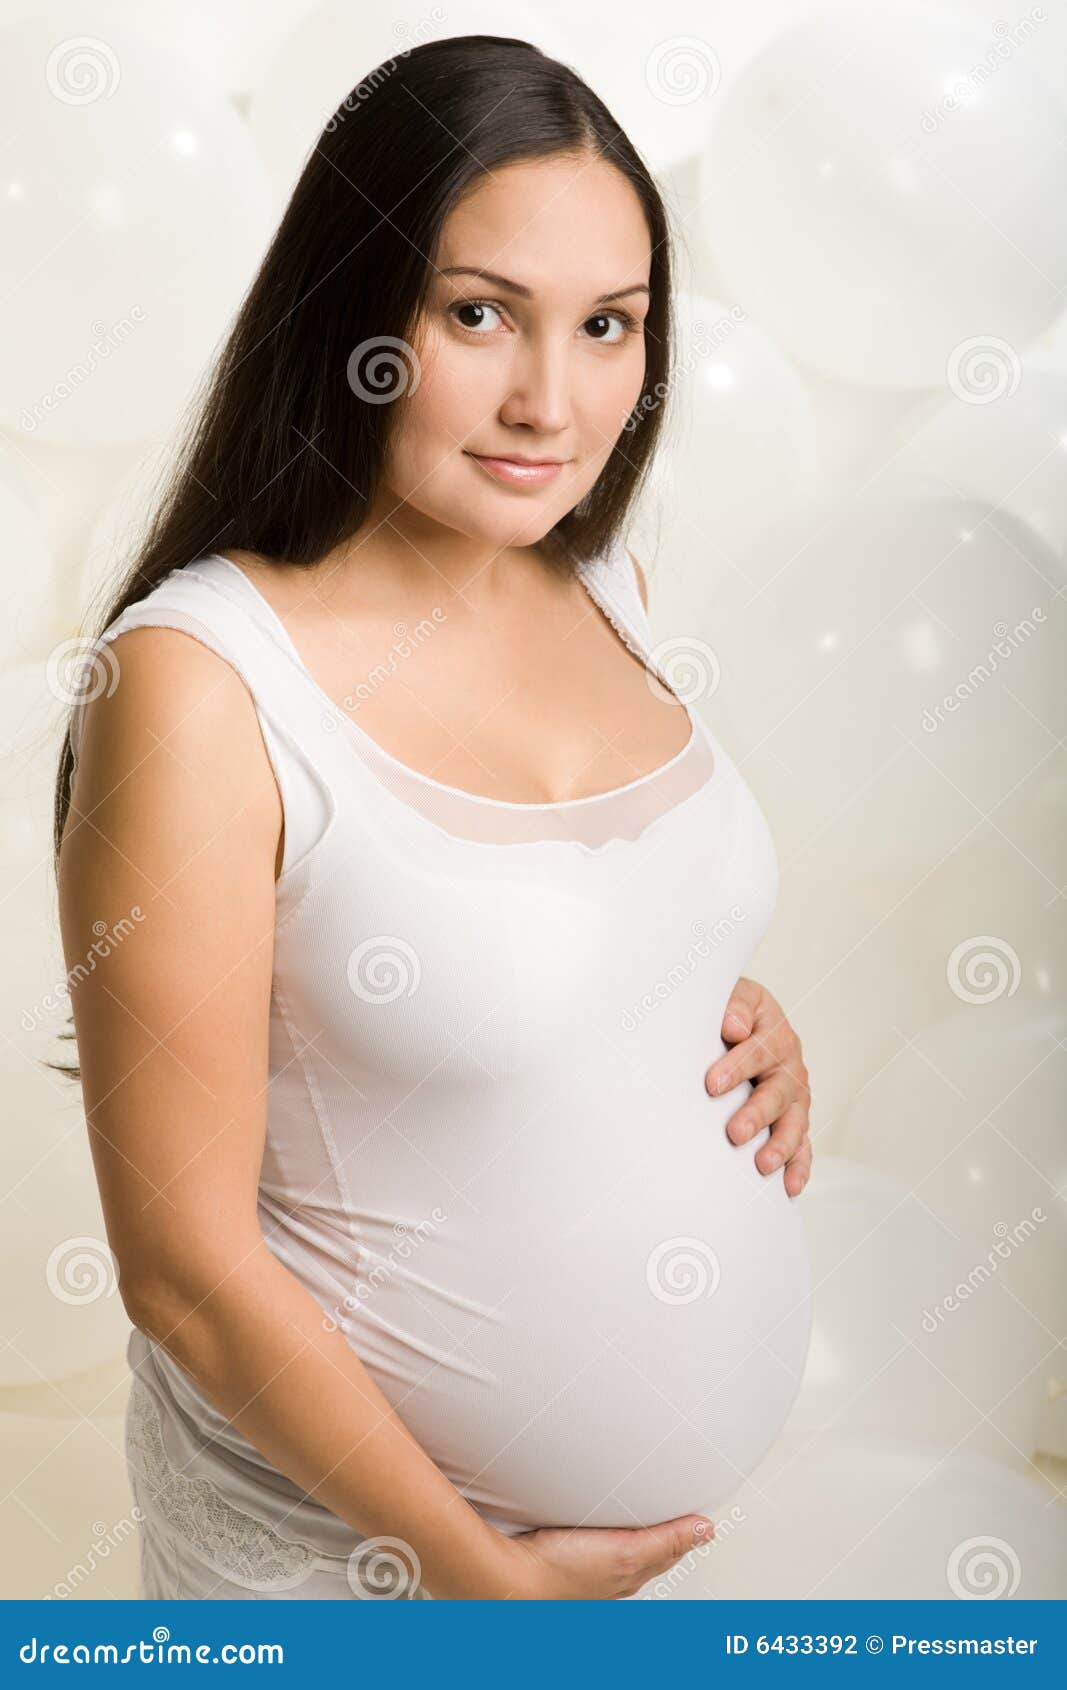 Pregnant Lady Photos 52